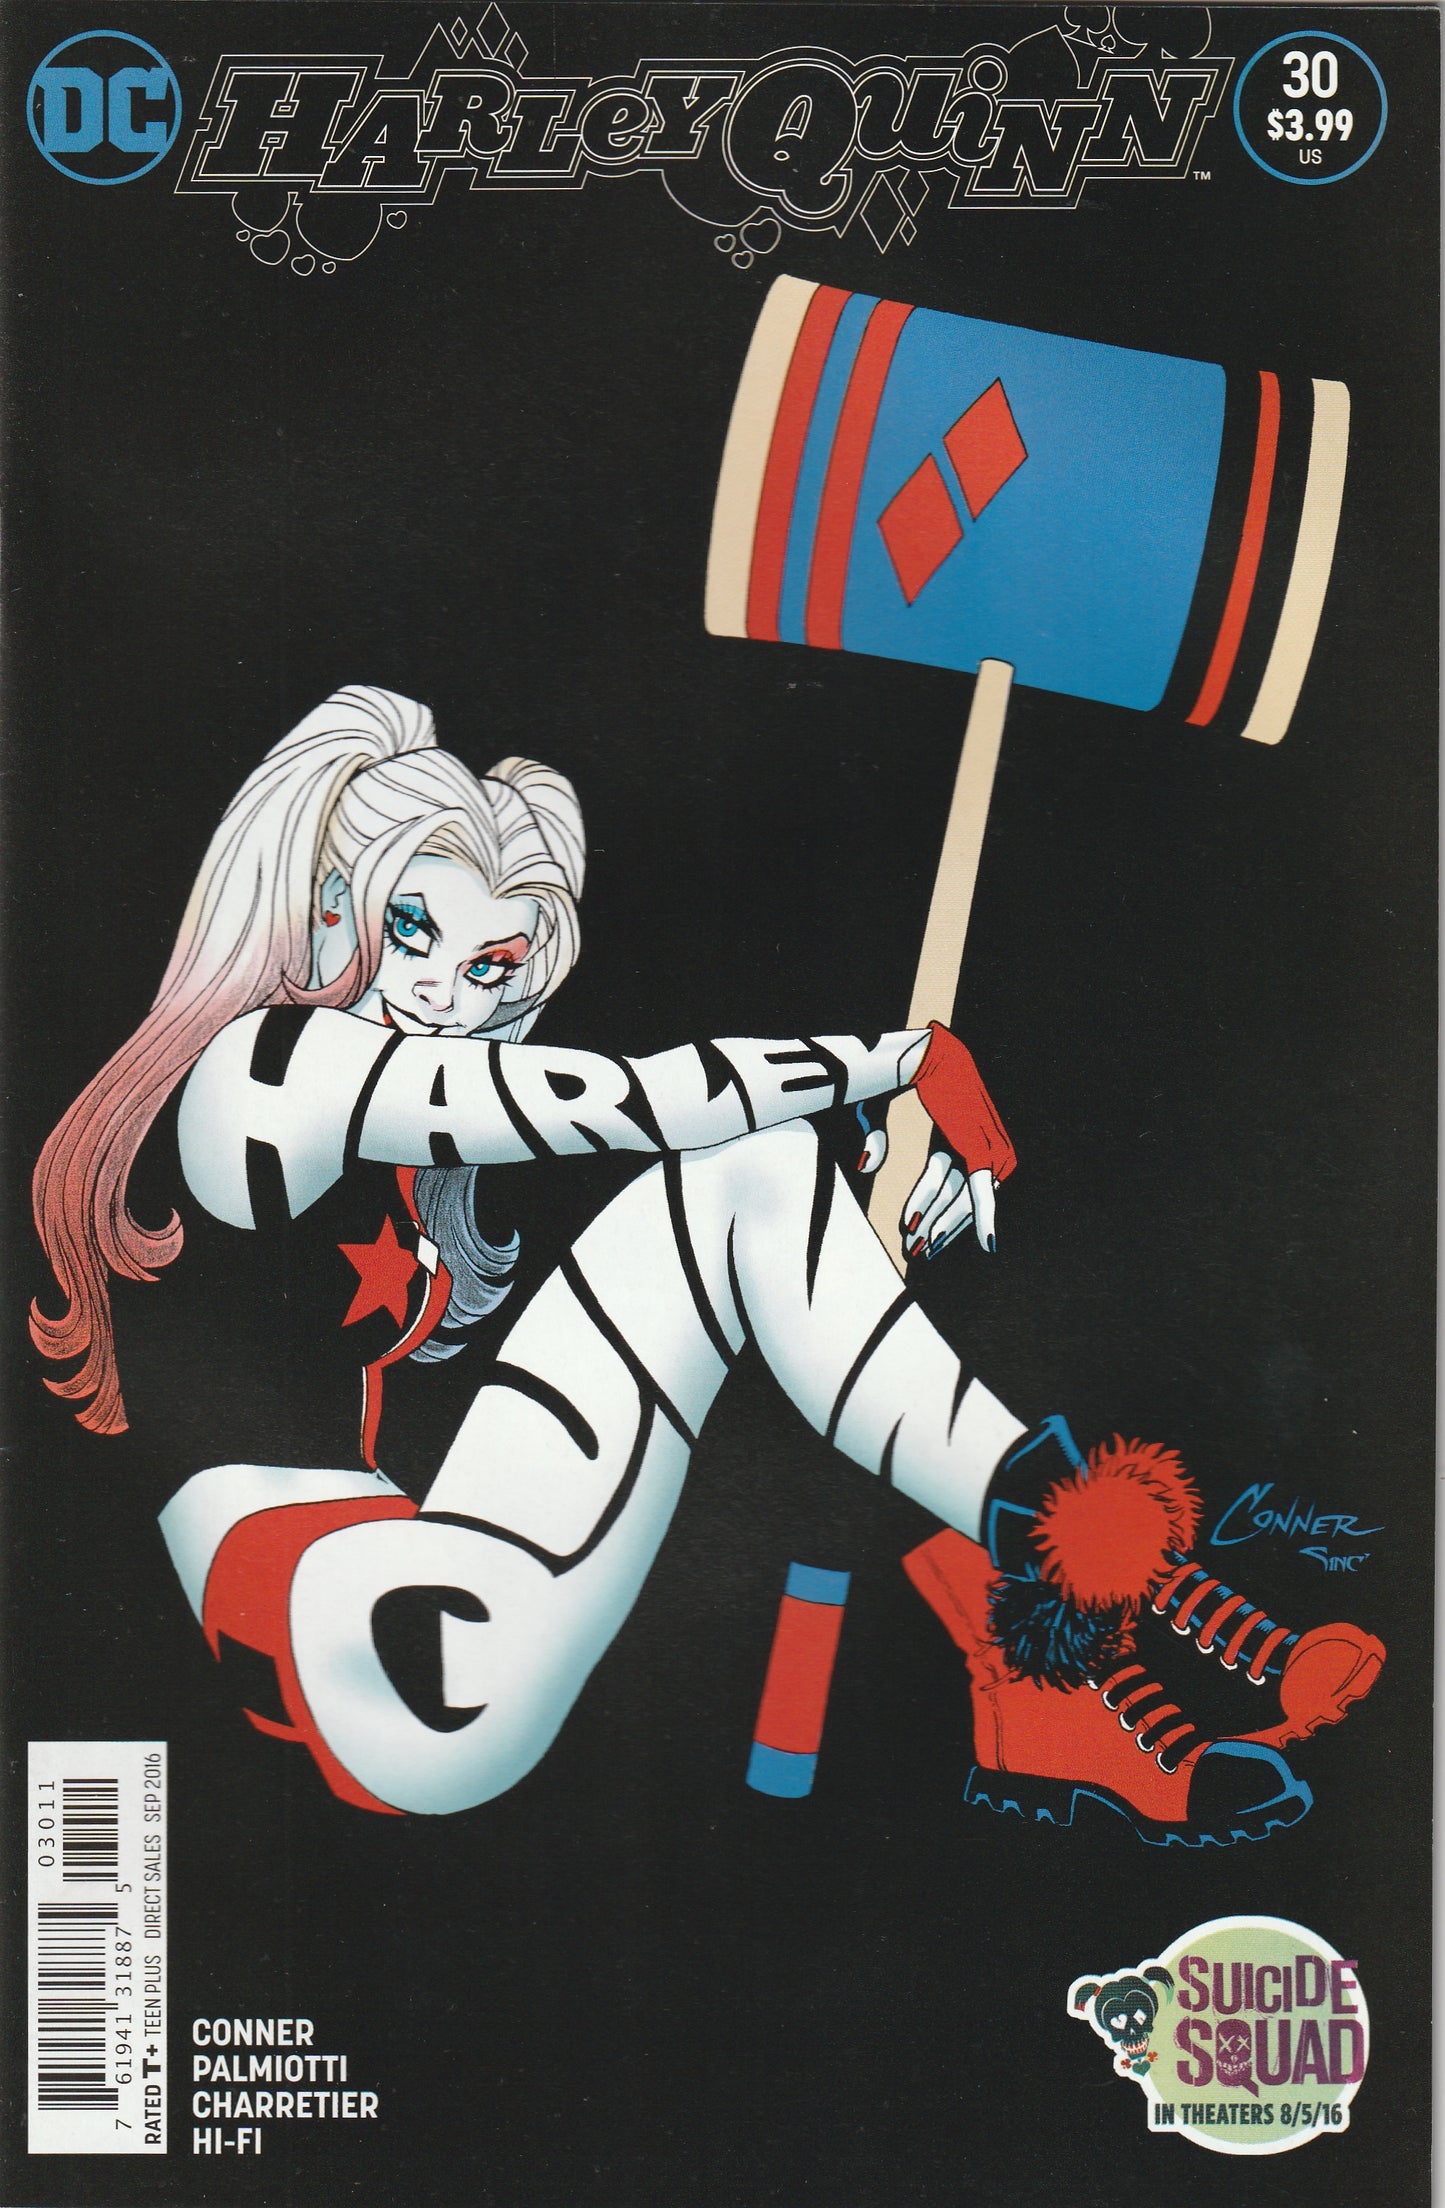 Harley Quinn #30 (Vol 2, 2016) - Classic cover